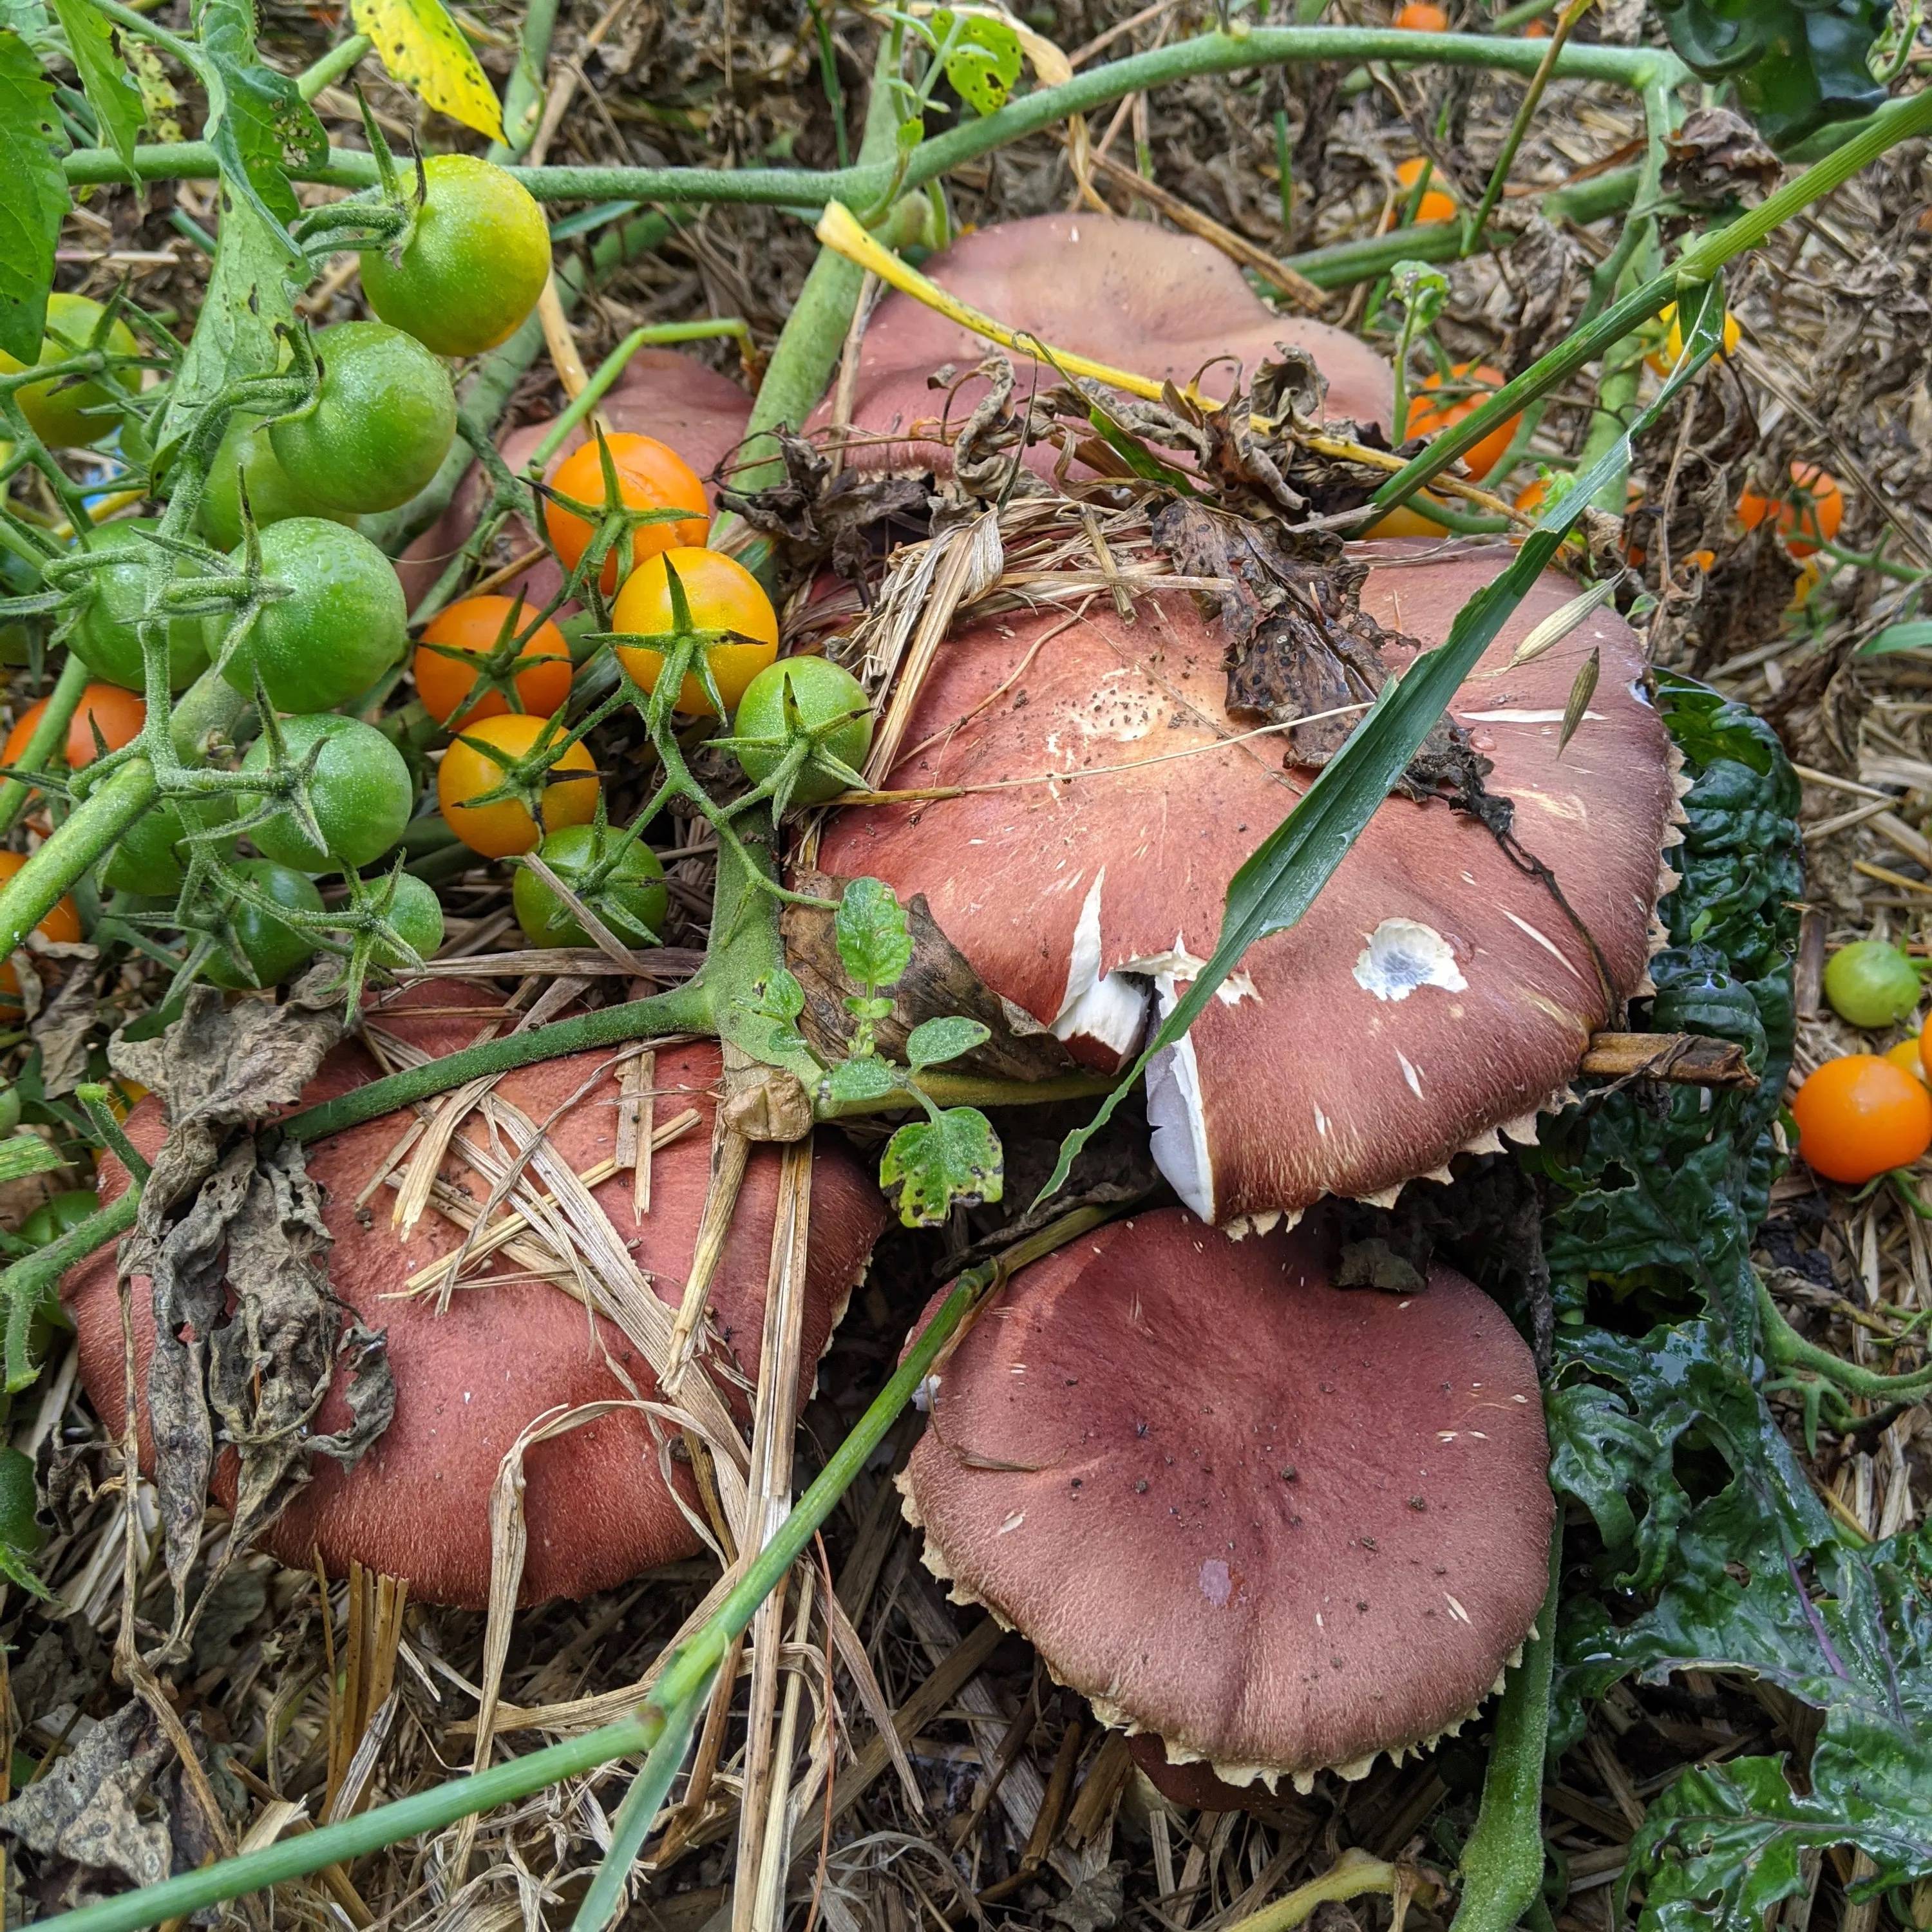 Gardening with mushrooms